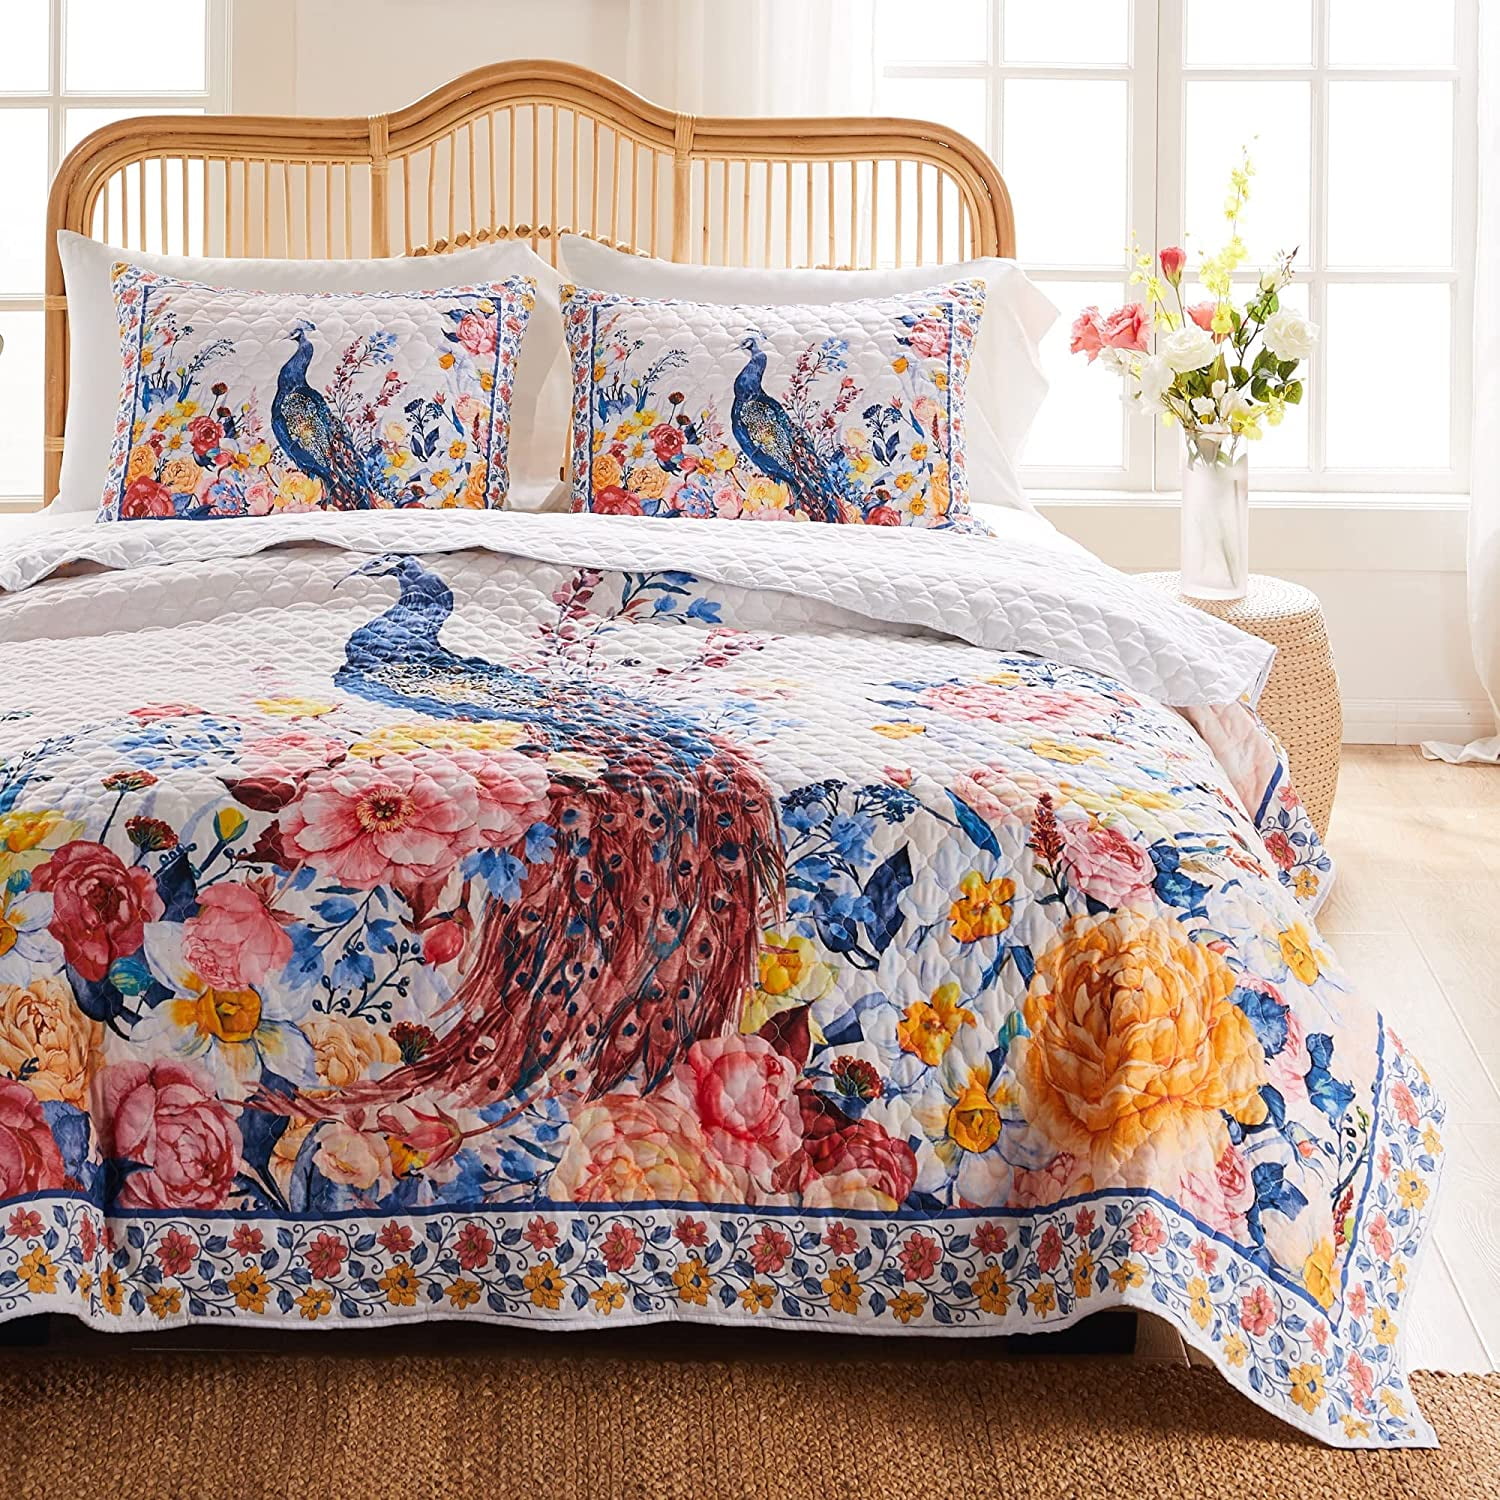 Details about   Kantha Quilt Bedspread Blanket Cotton  Bedding Indian Hand Block Peacock Print 